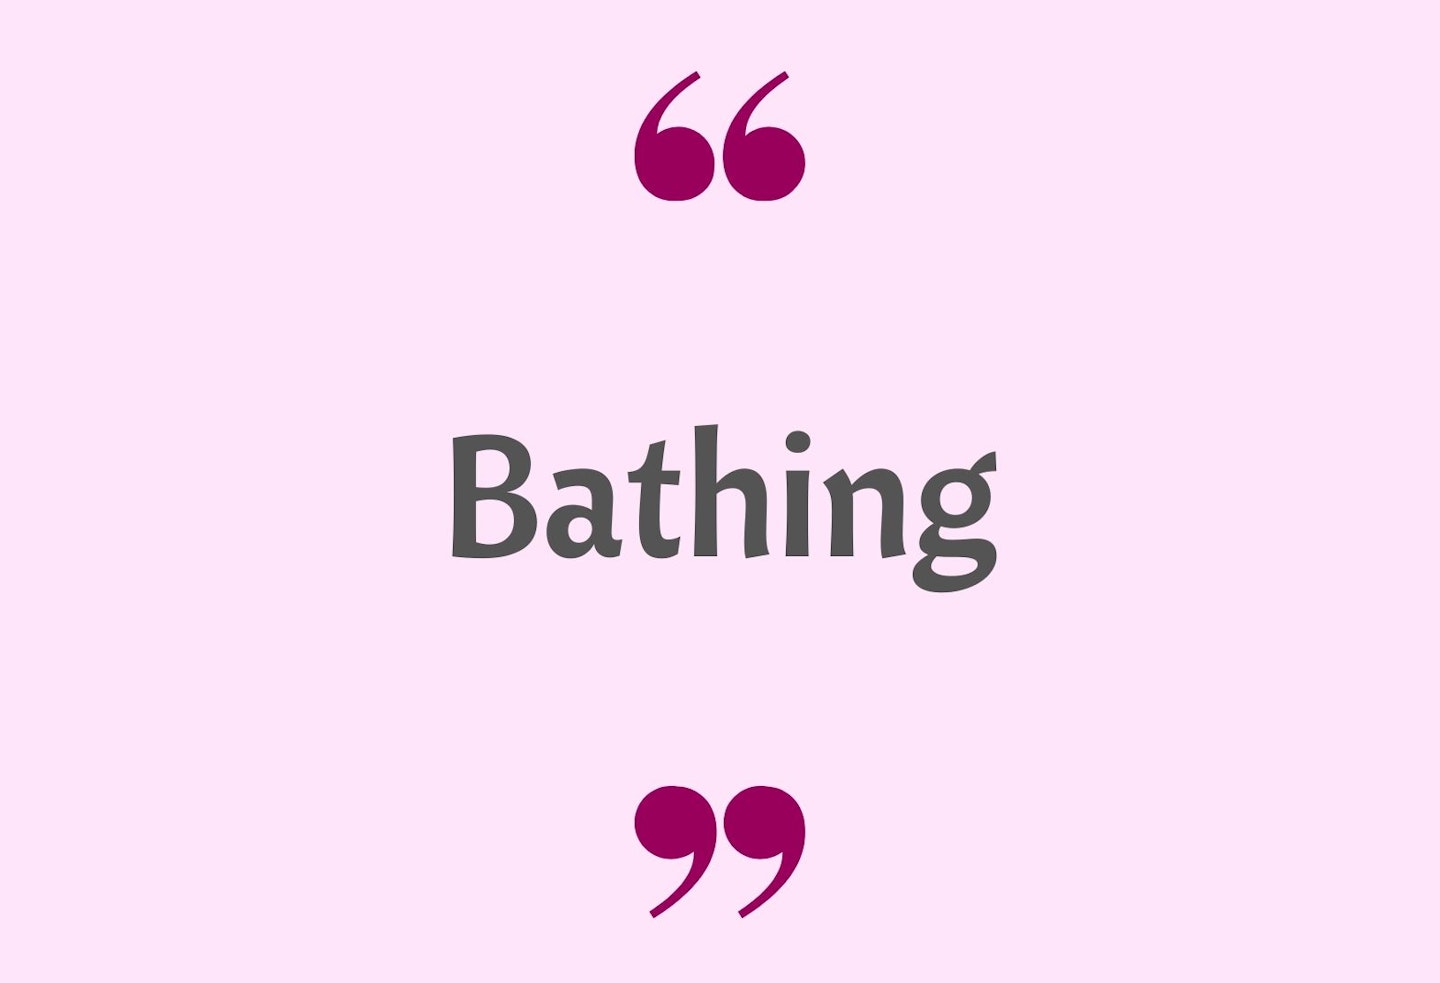 5) Bathing